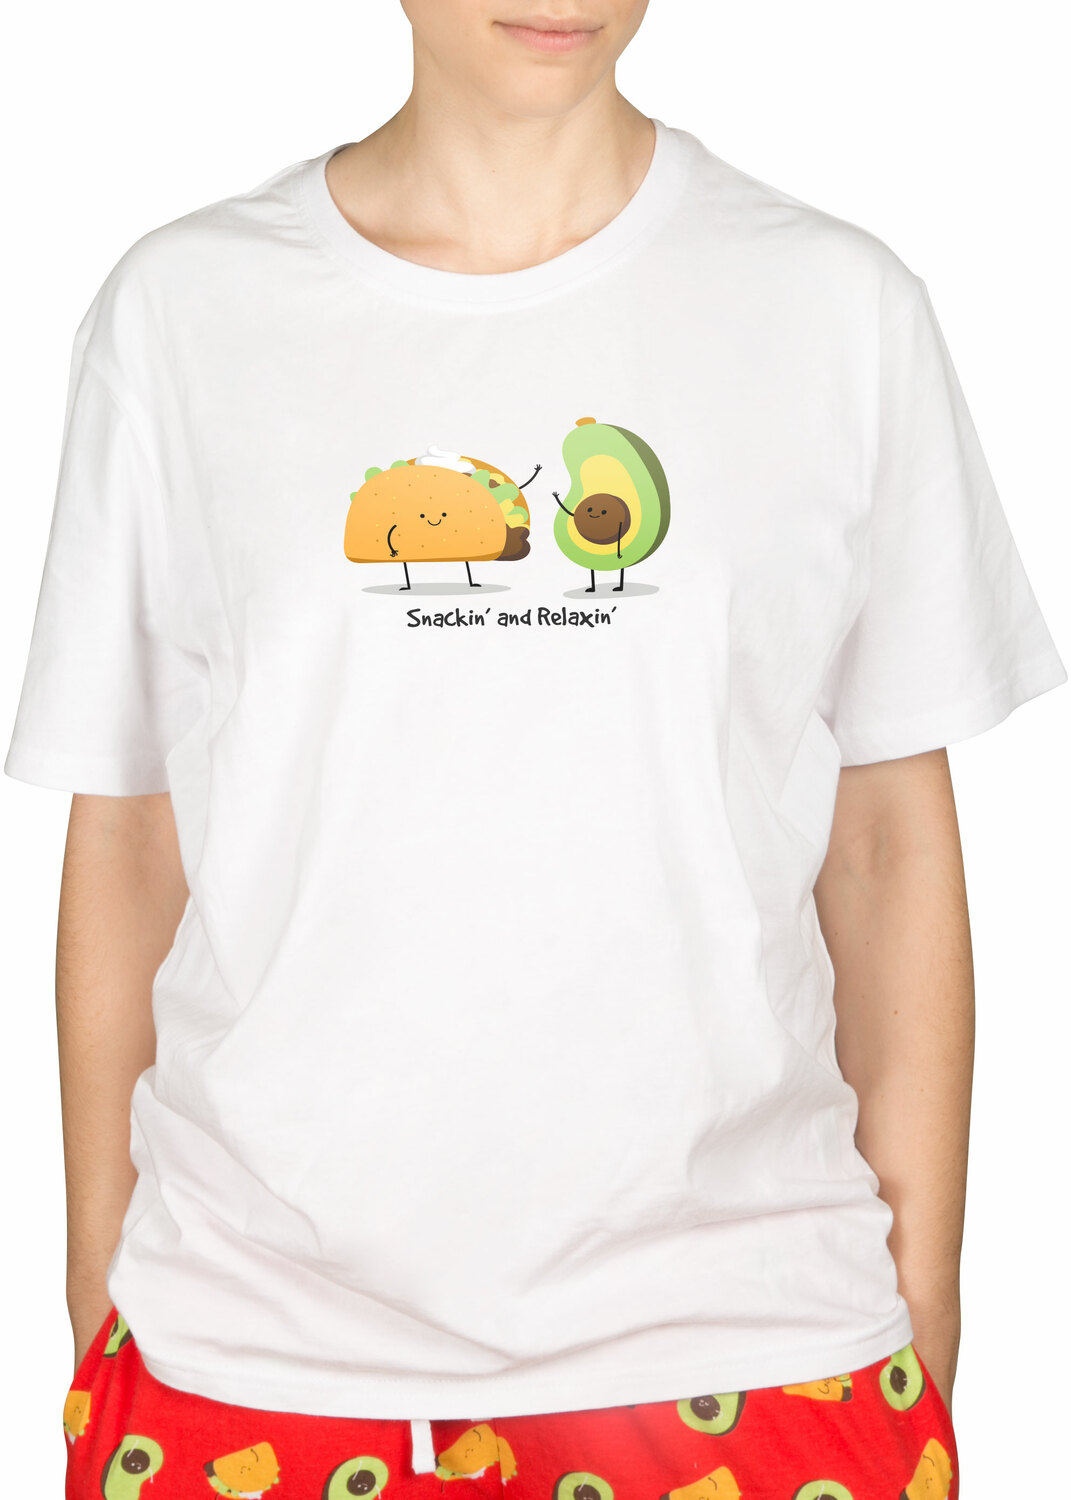 Taco and Avocado by Late Night Snacks - Taco and Avocado - S Unisex T-Shirt